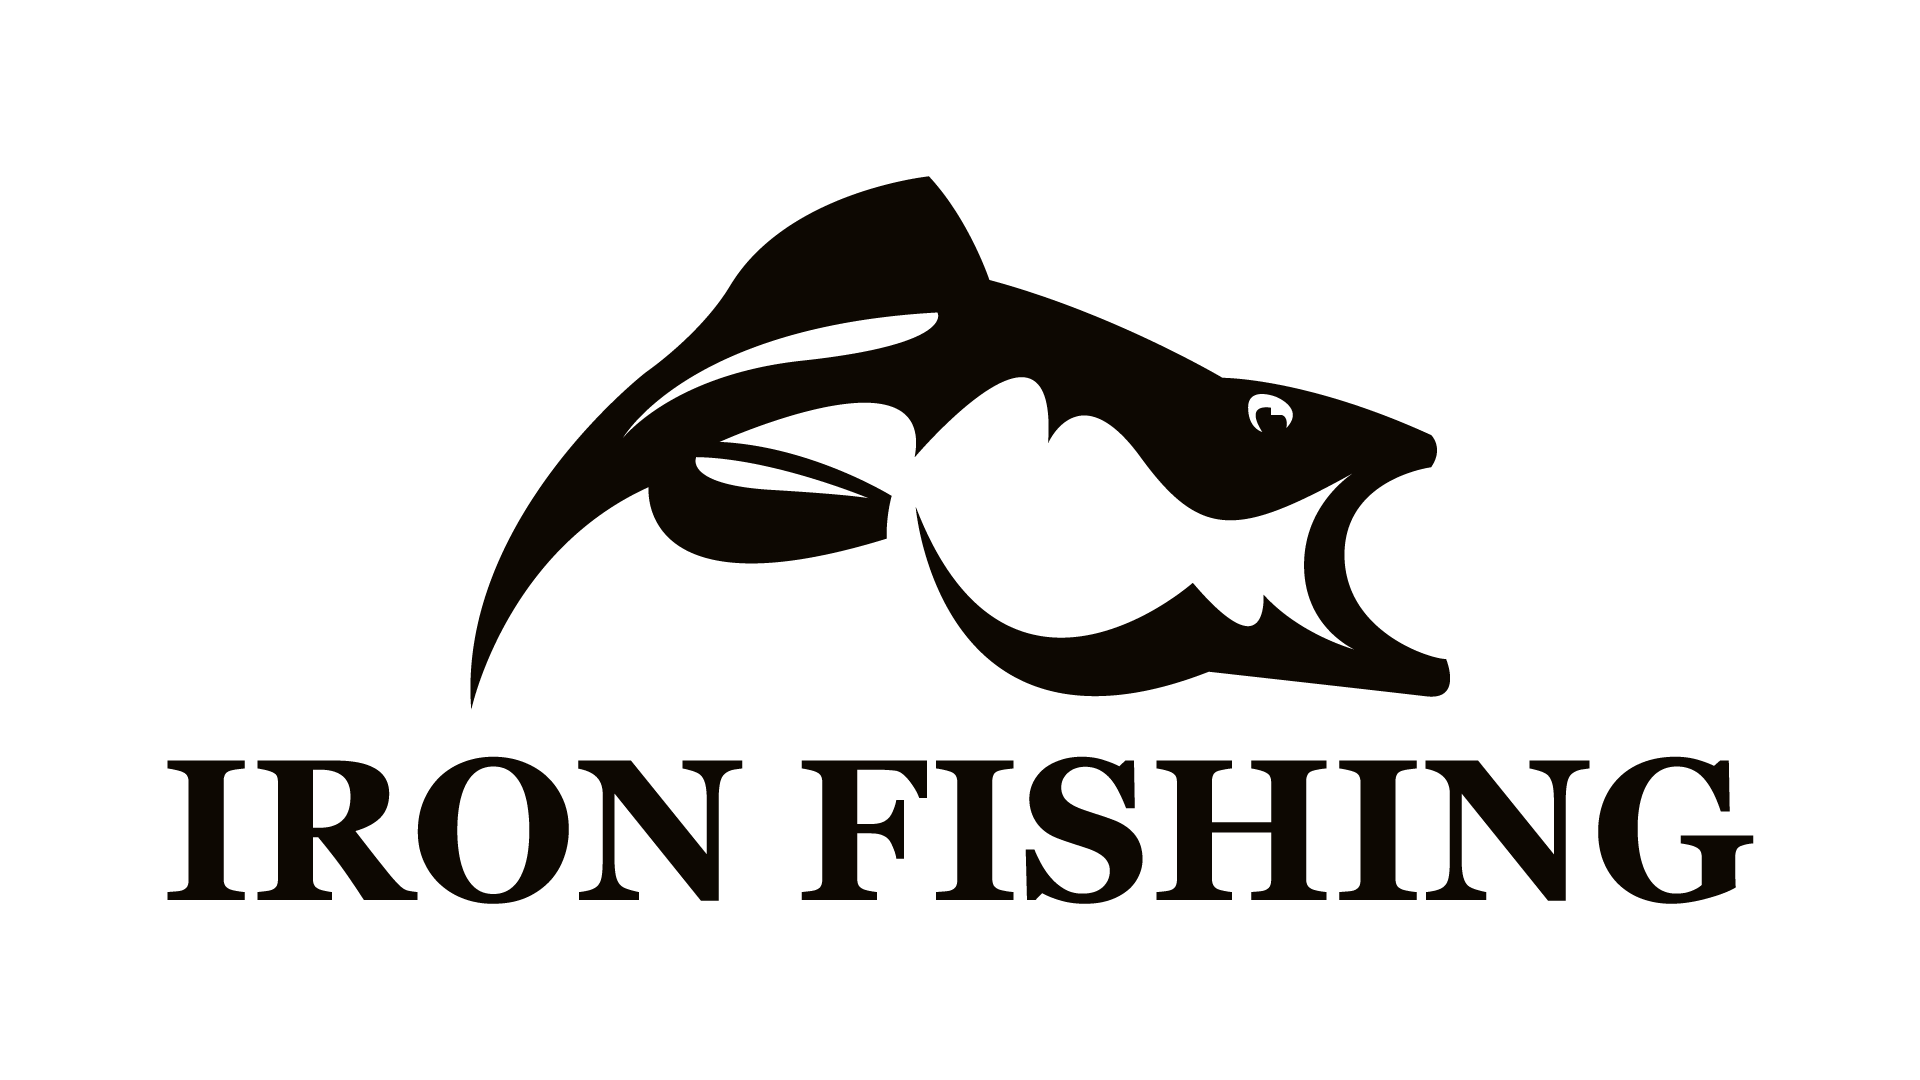 IRON FISHING